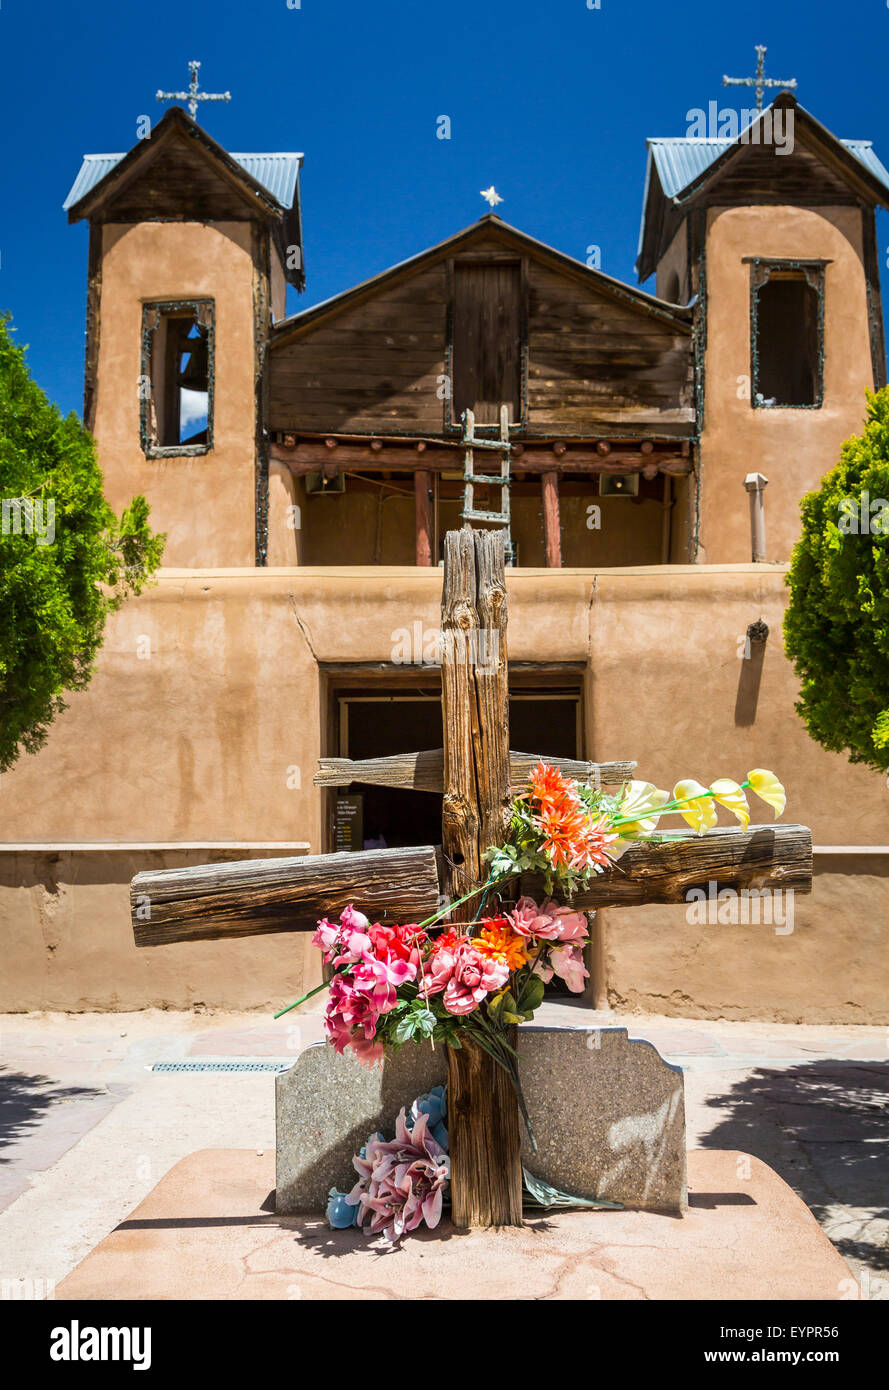 Die römisch-katholische Kirche El Santuario de Chimayó in Chimayo, New Mexico, USA Stockfoto